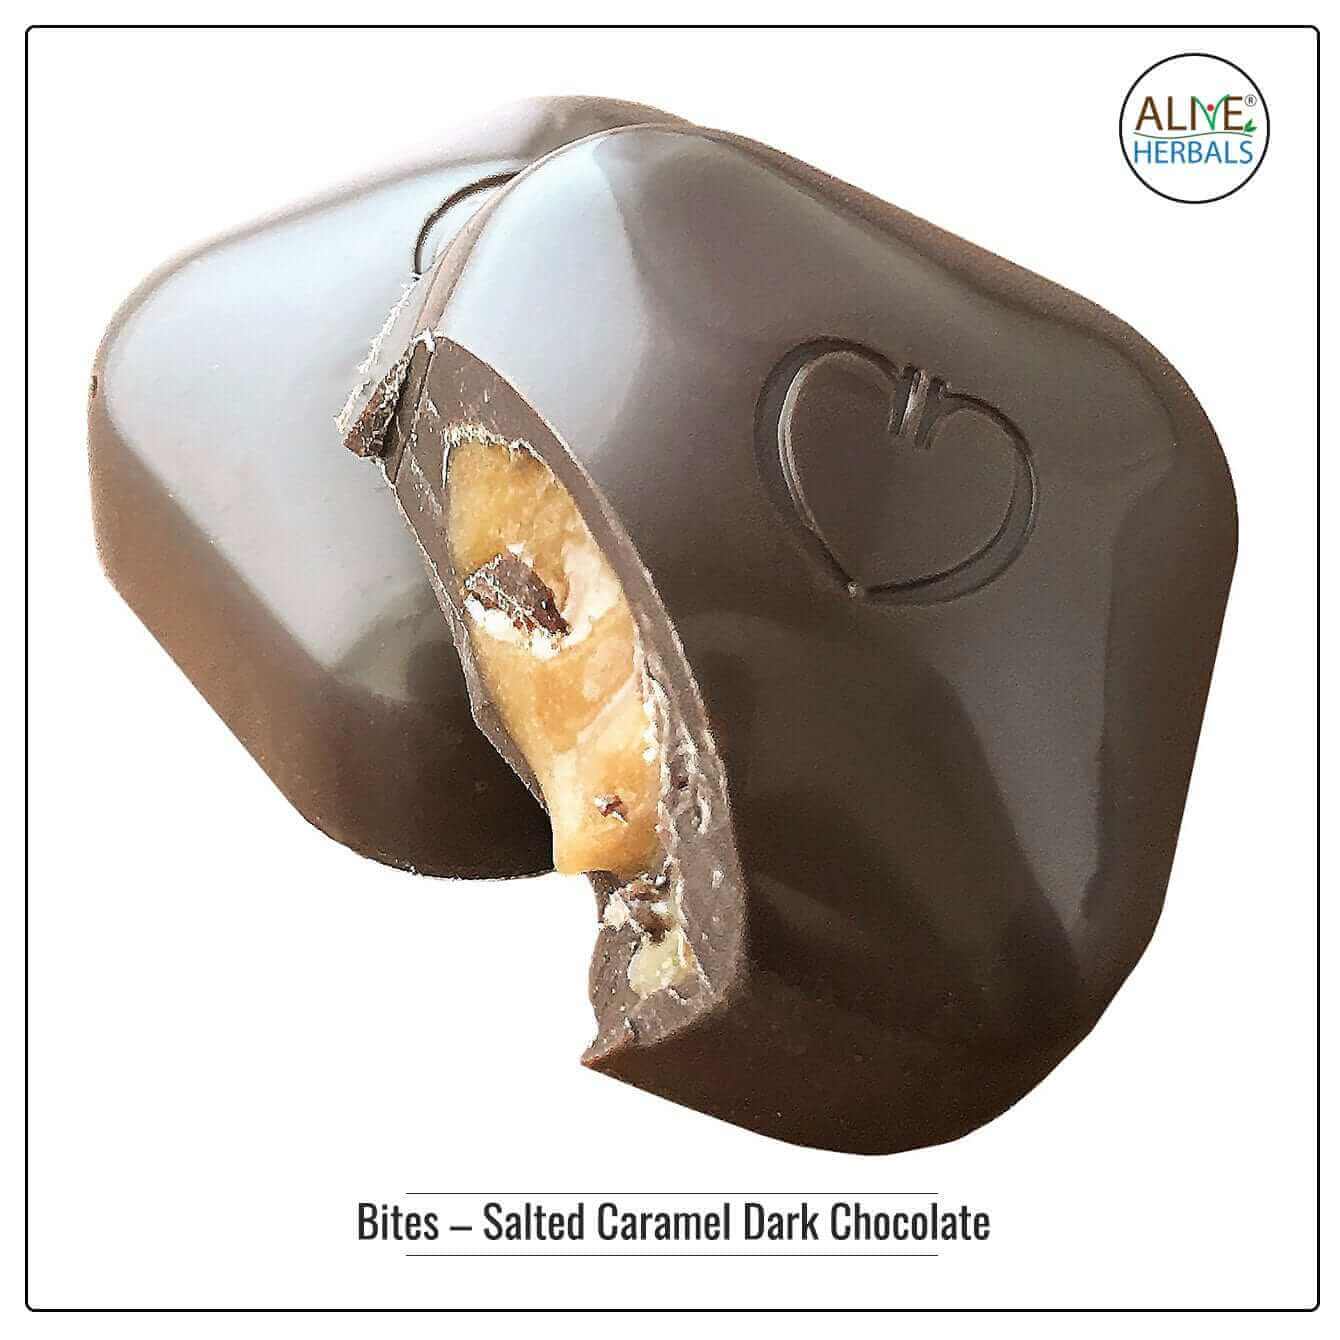 Bites – Salted Caramel Dark Chocolate - Buy at Natural Food Store | Alive Herbals.